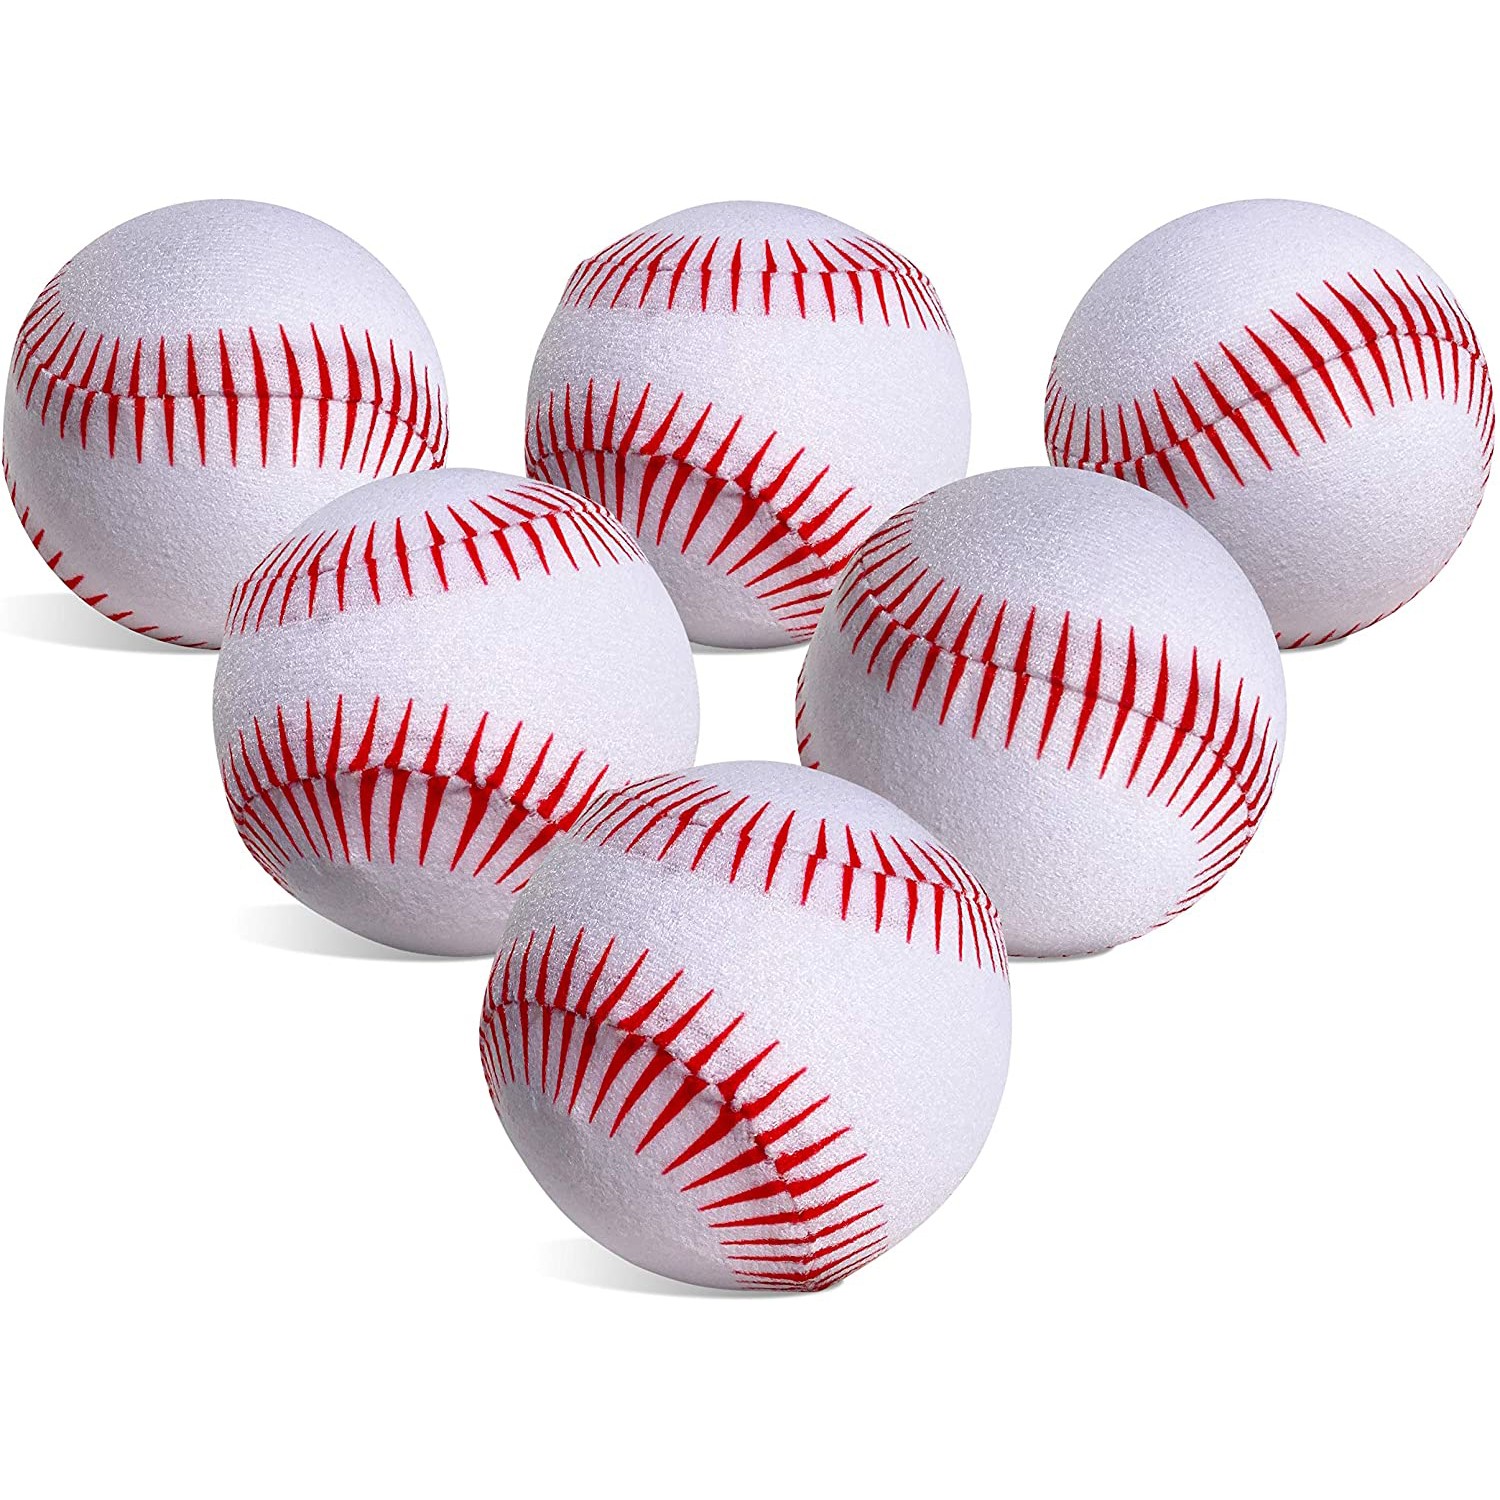 https://knockerball.com/wp-content/uploads/2021/11/velcro-baseballs-6-pack-crop.jpg